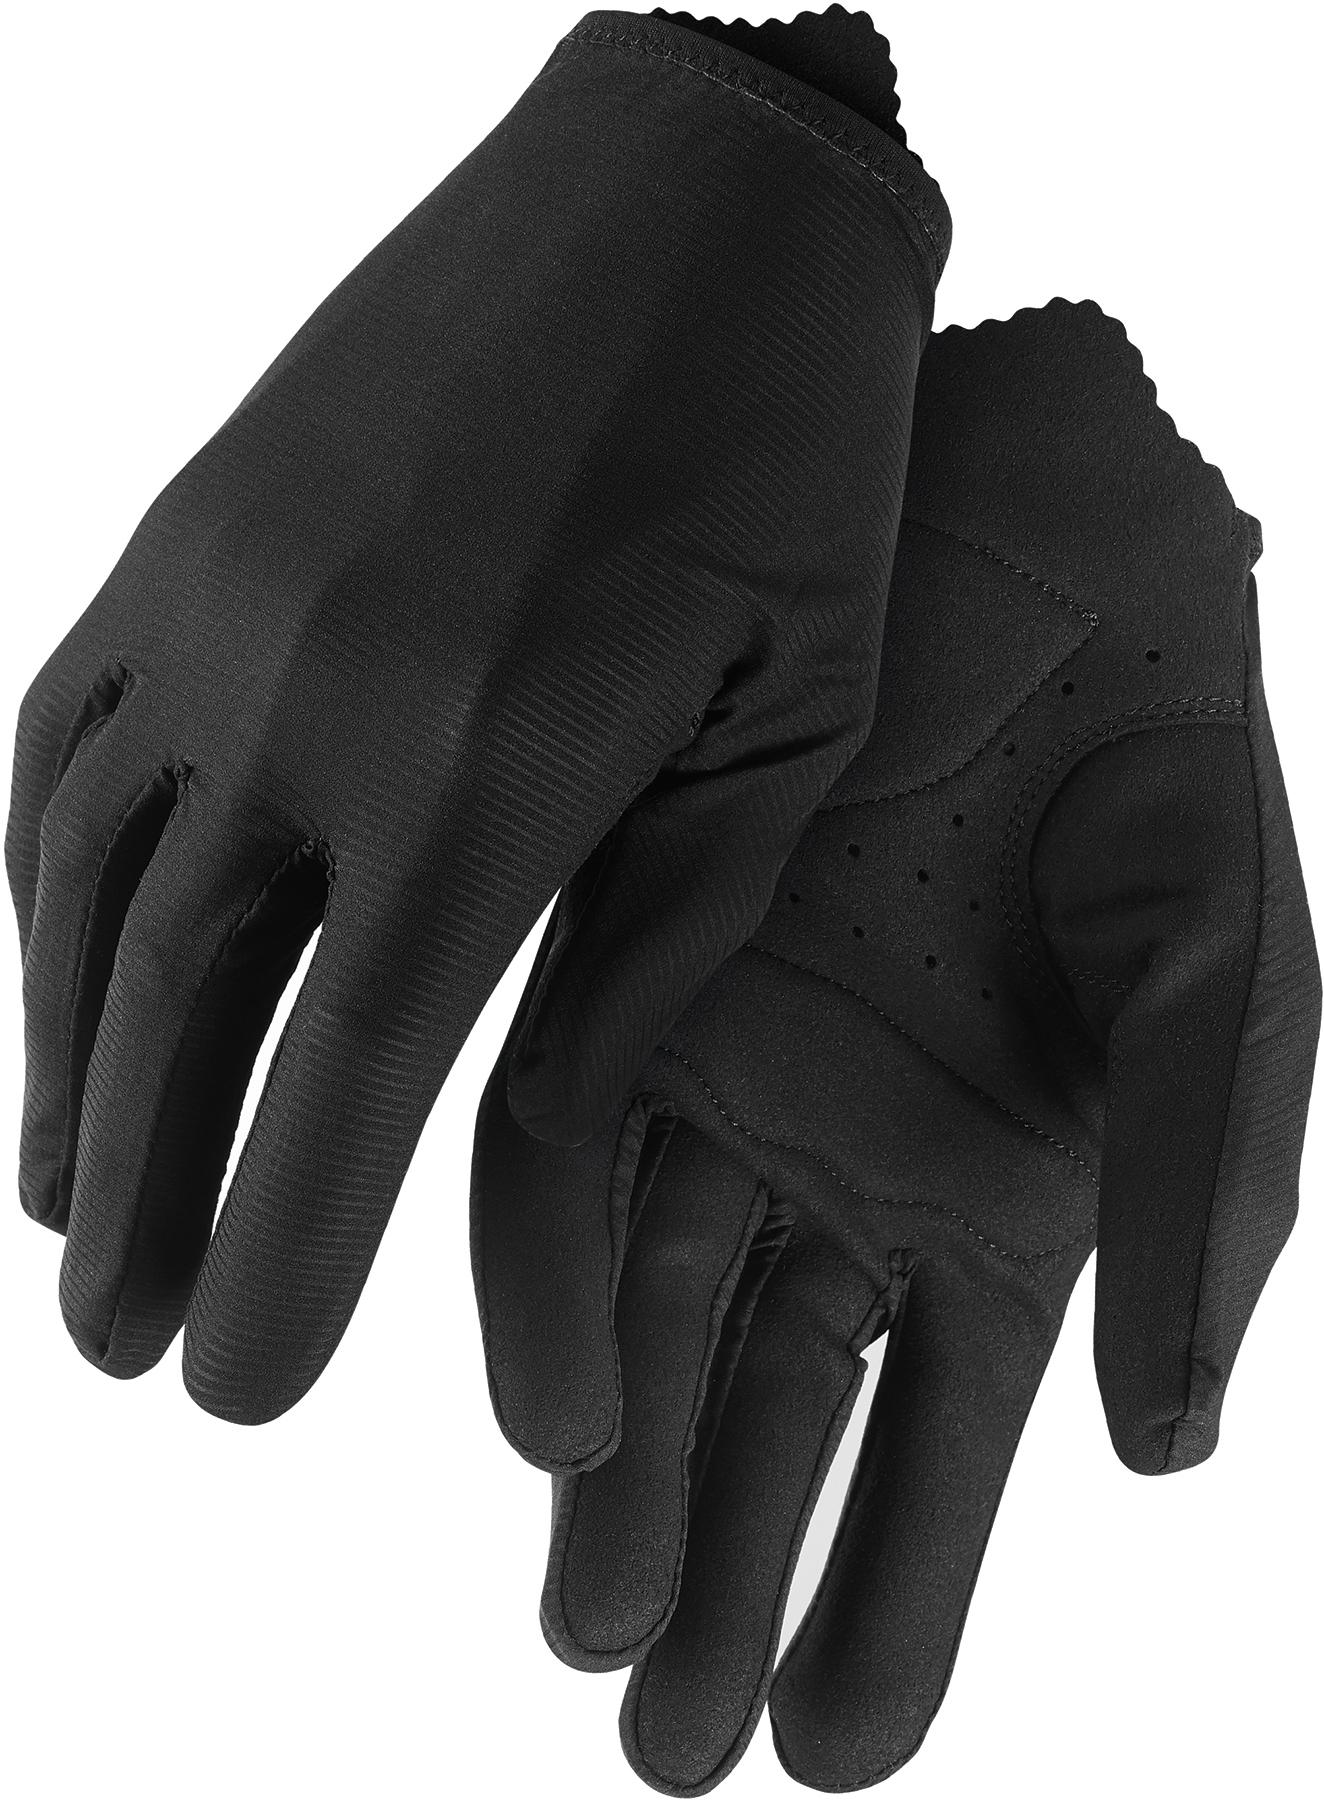 Assos Rs Aero Ff Gloves  Black Series